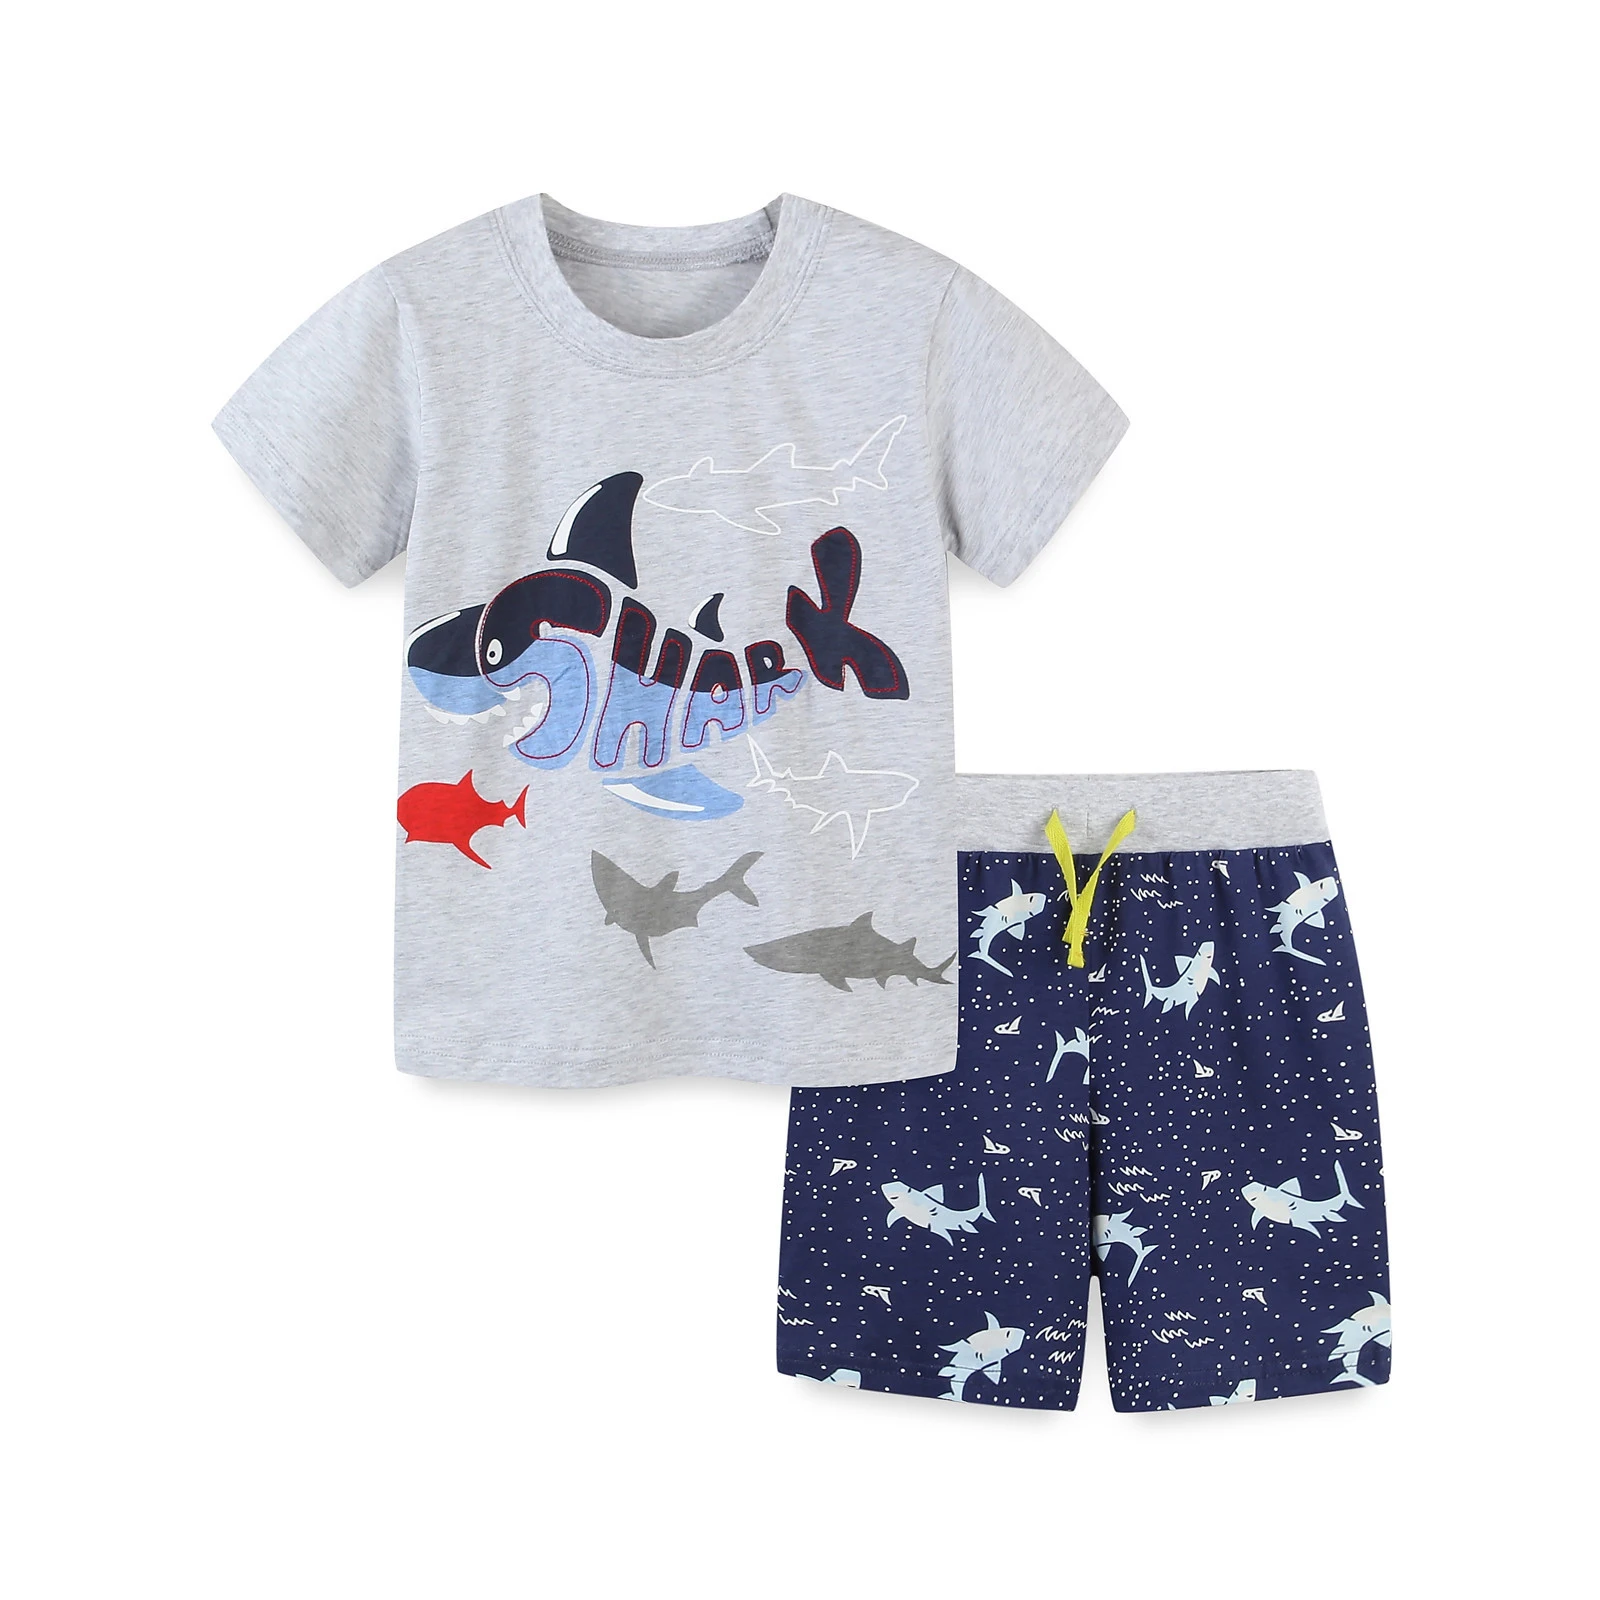 SUNFEID Toddler Boys Shorts Set Cotton Short Sleeve Summer Clothes 